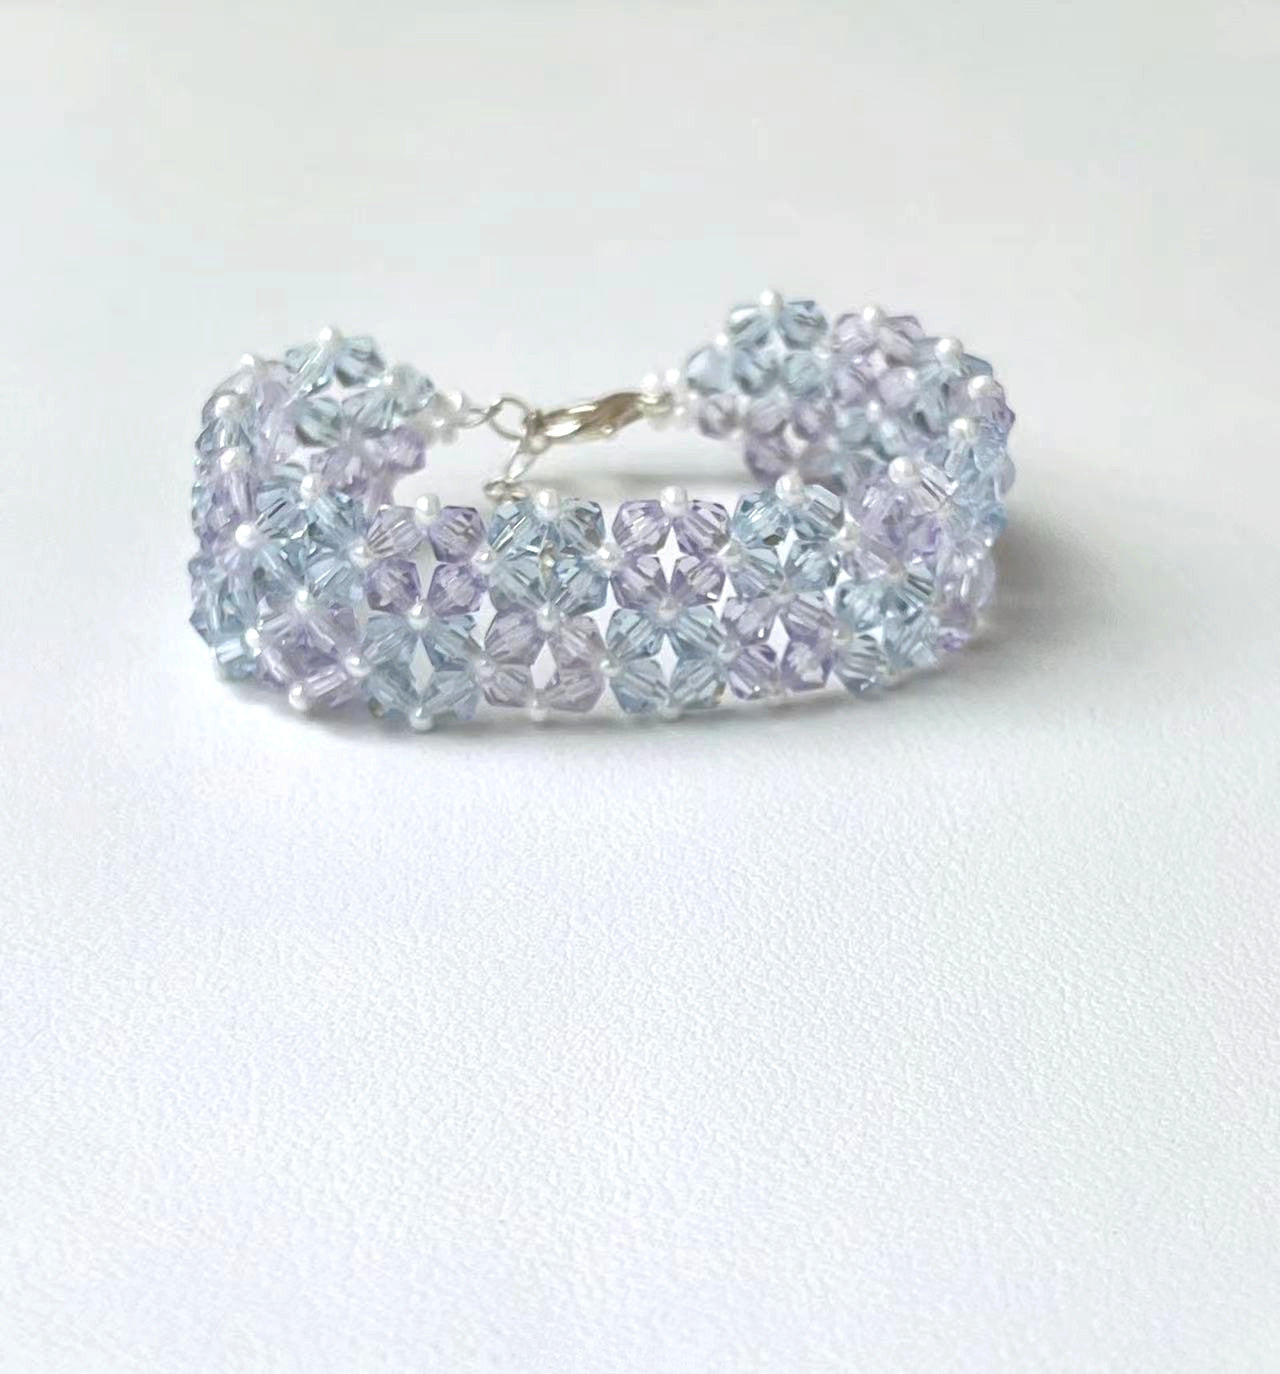 Stylish Handmade Glass Bead Bangle for Personal Wear